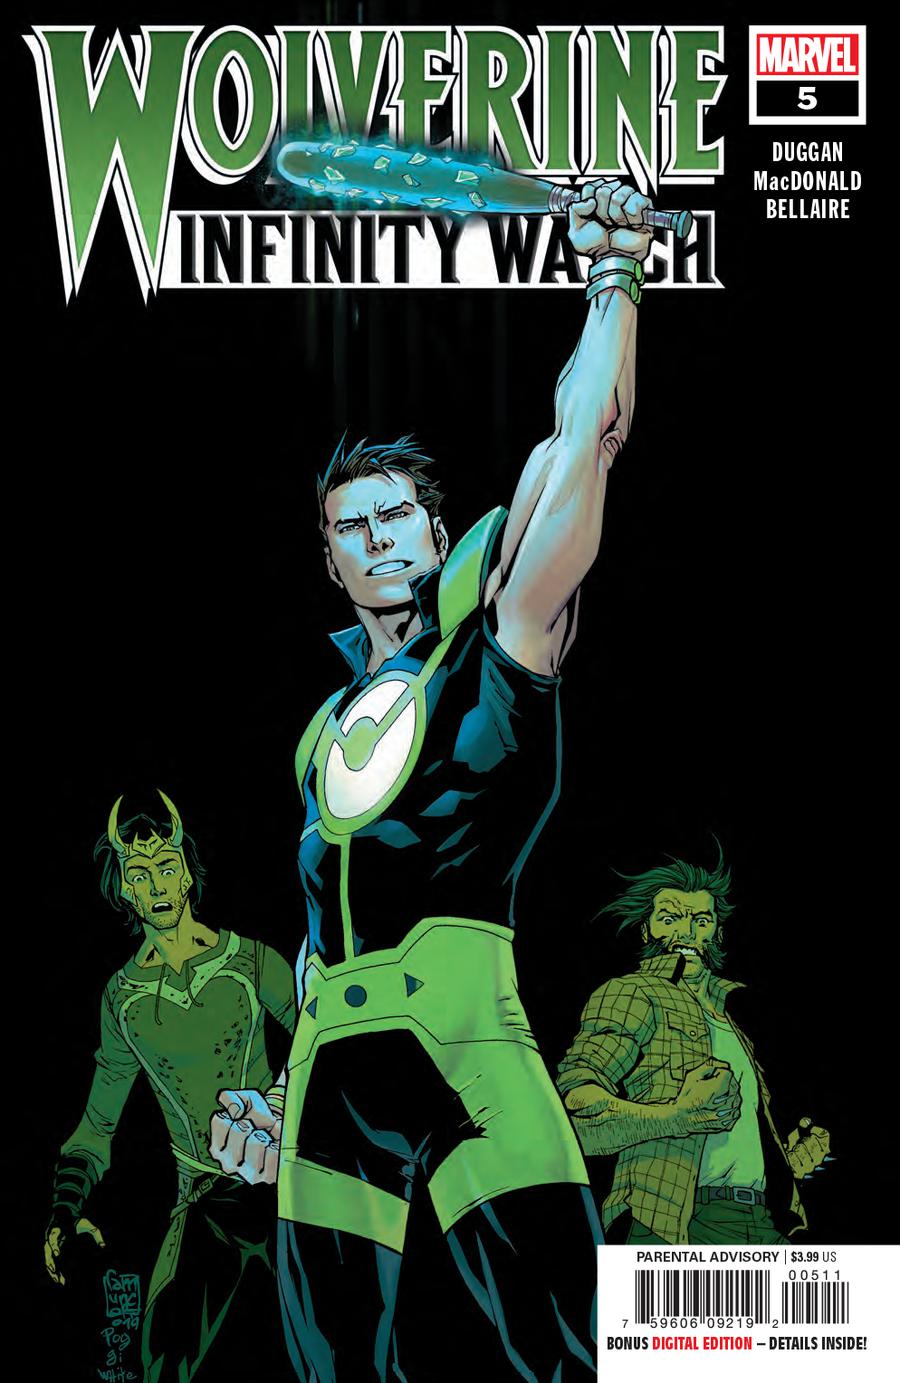 Wolverine Infinity Watch #5